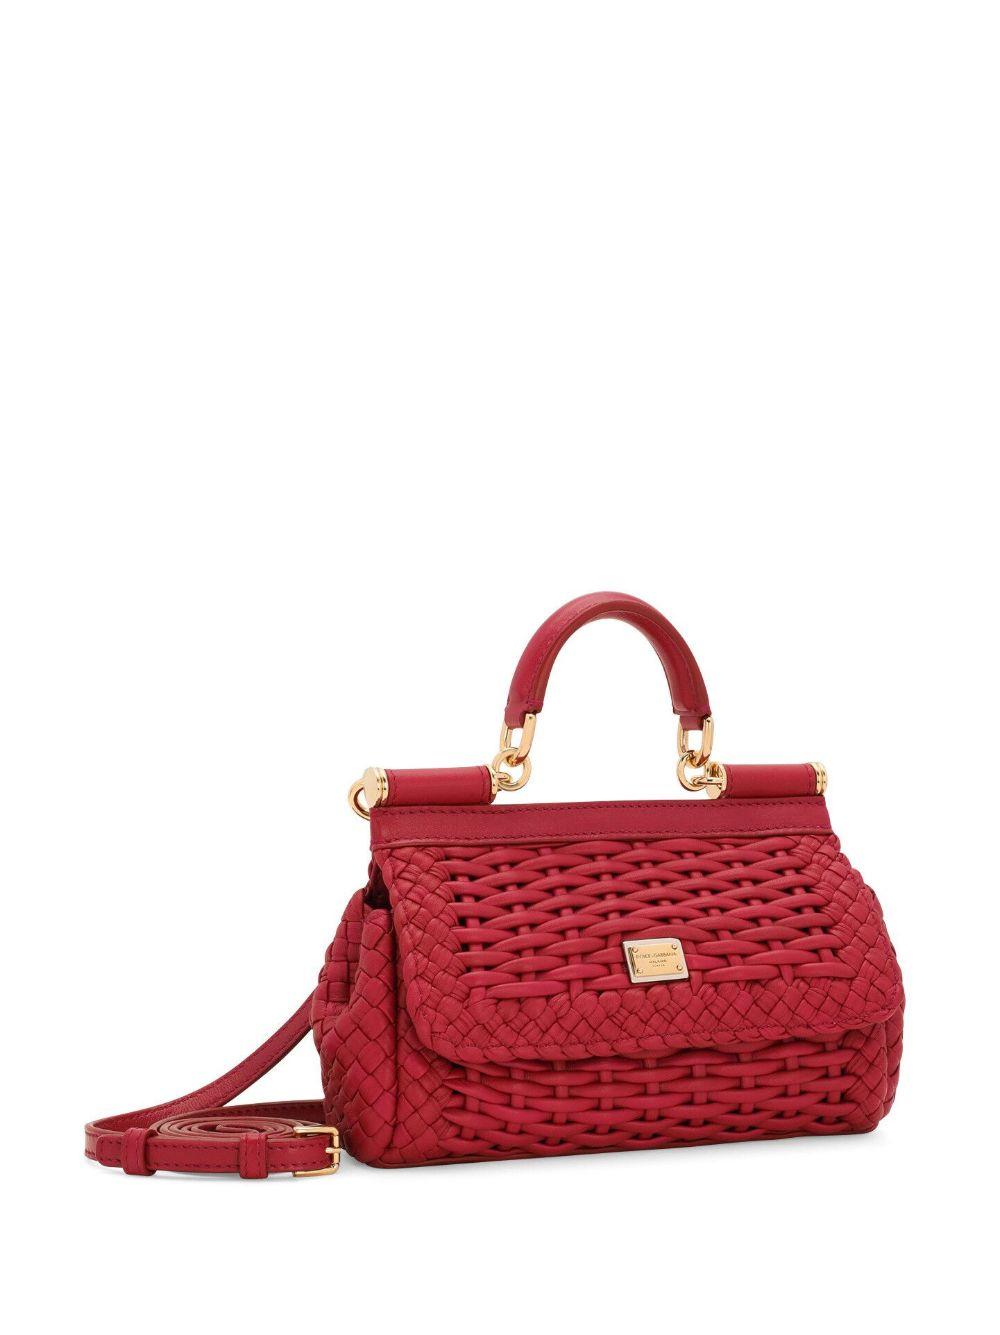 Dolce & Gabbana Miss Sicily Mini Shoulder Bag in Red